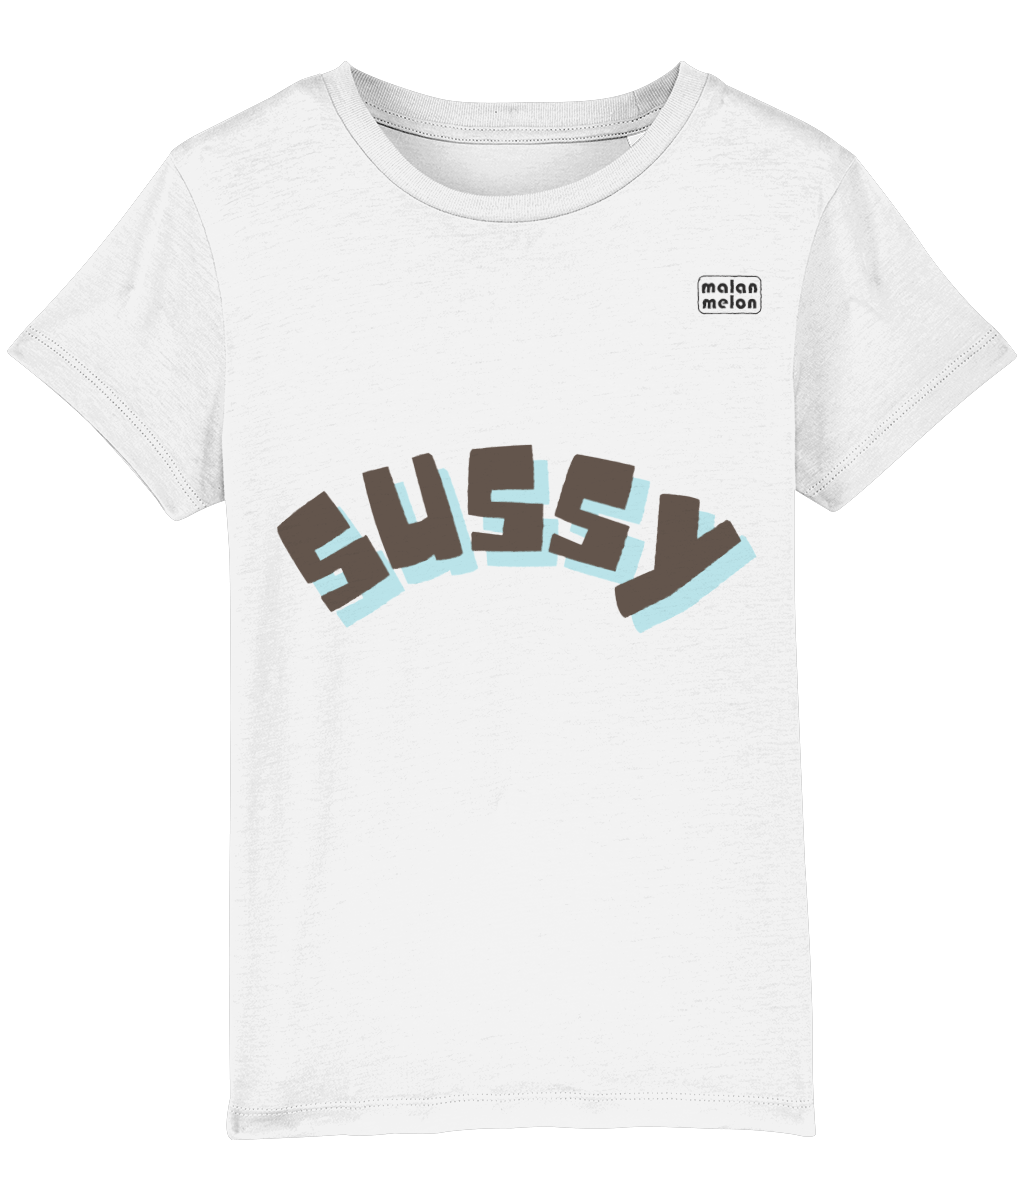 malanmelon - Kids T-Shirt – Organic Cotton – Sussy Slogan - Dark Grey on Multi-Colours